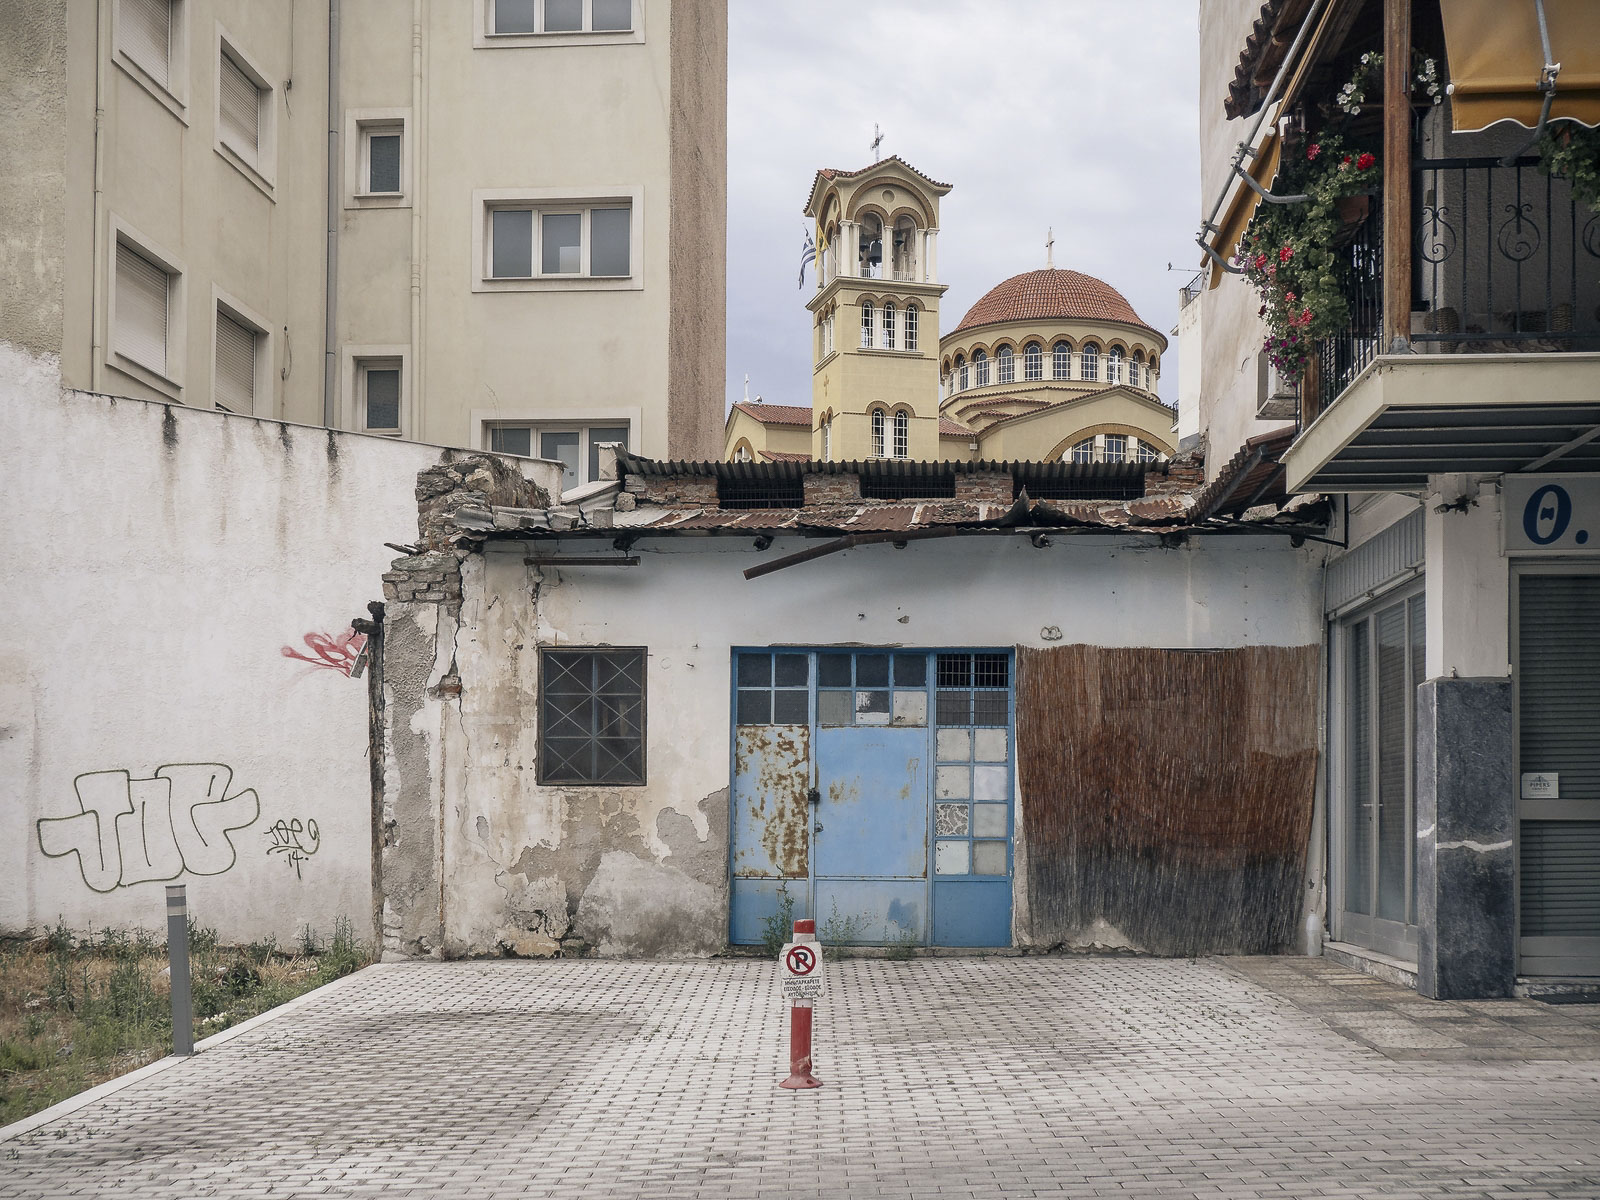 The Provinces - Urban Pulp by Vasilis Ntaopoulos